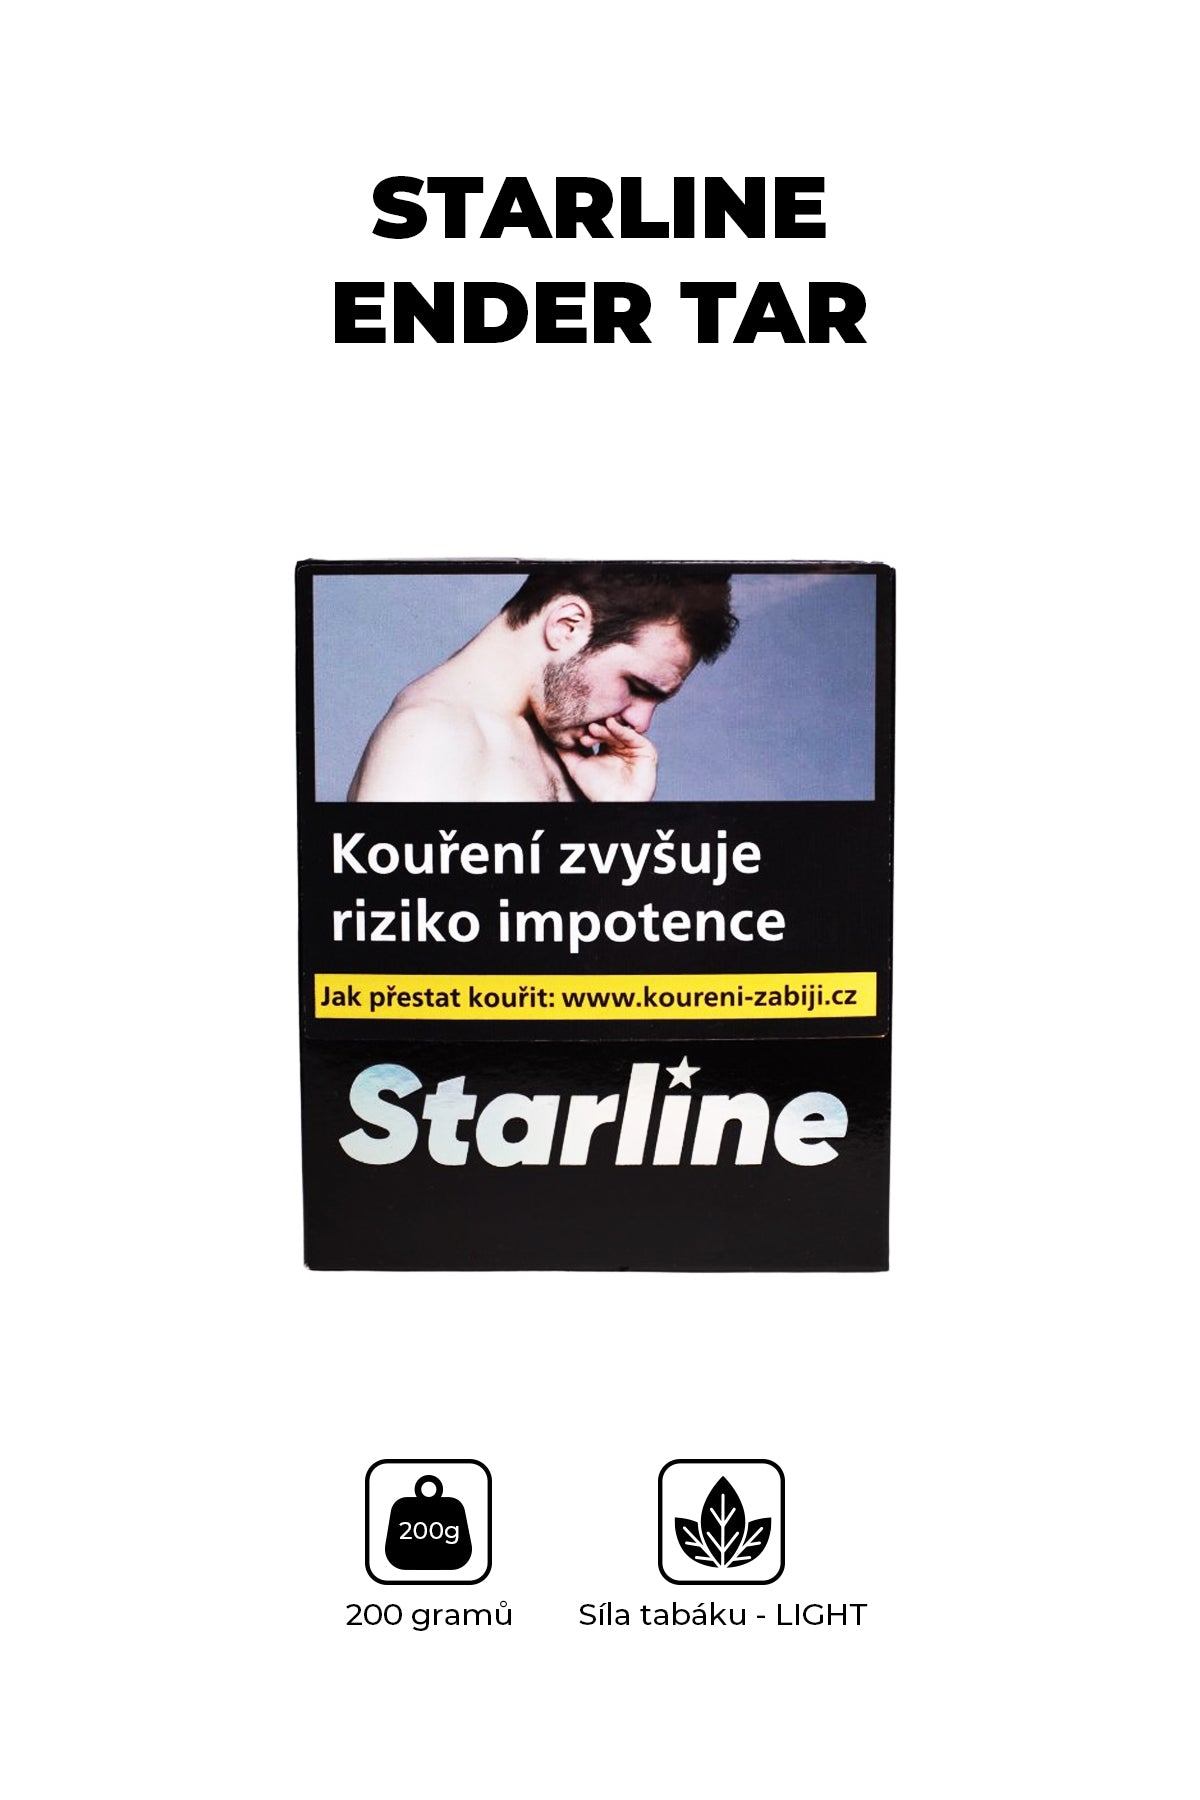 Tabák - Starline 200g - Tender Tar